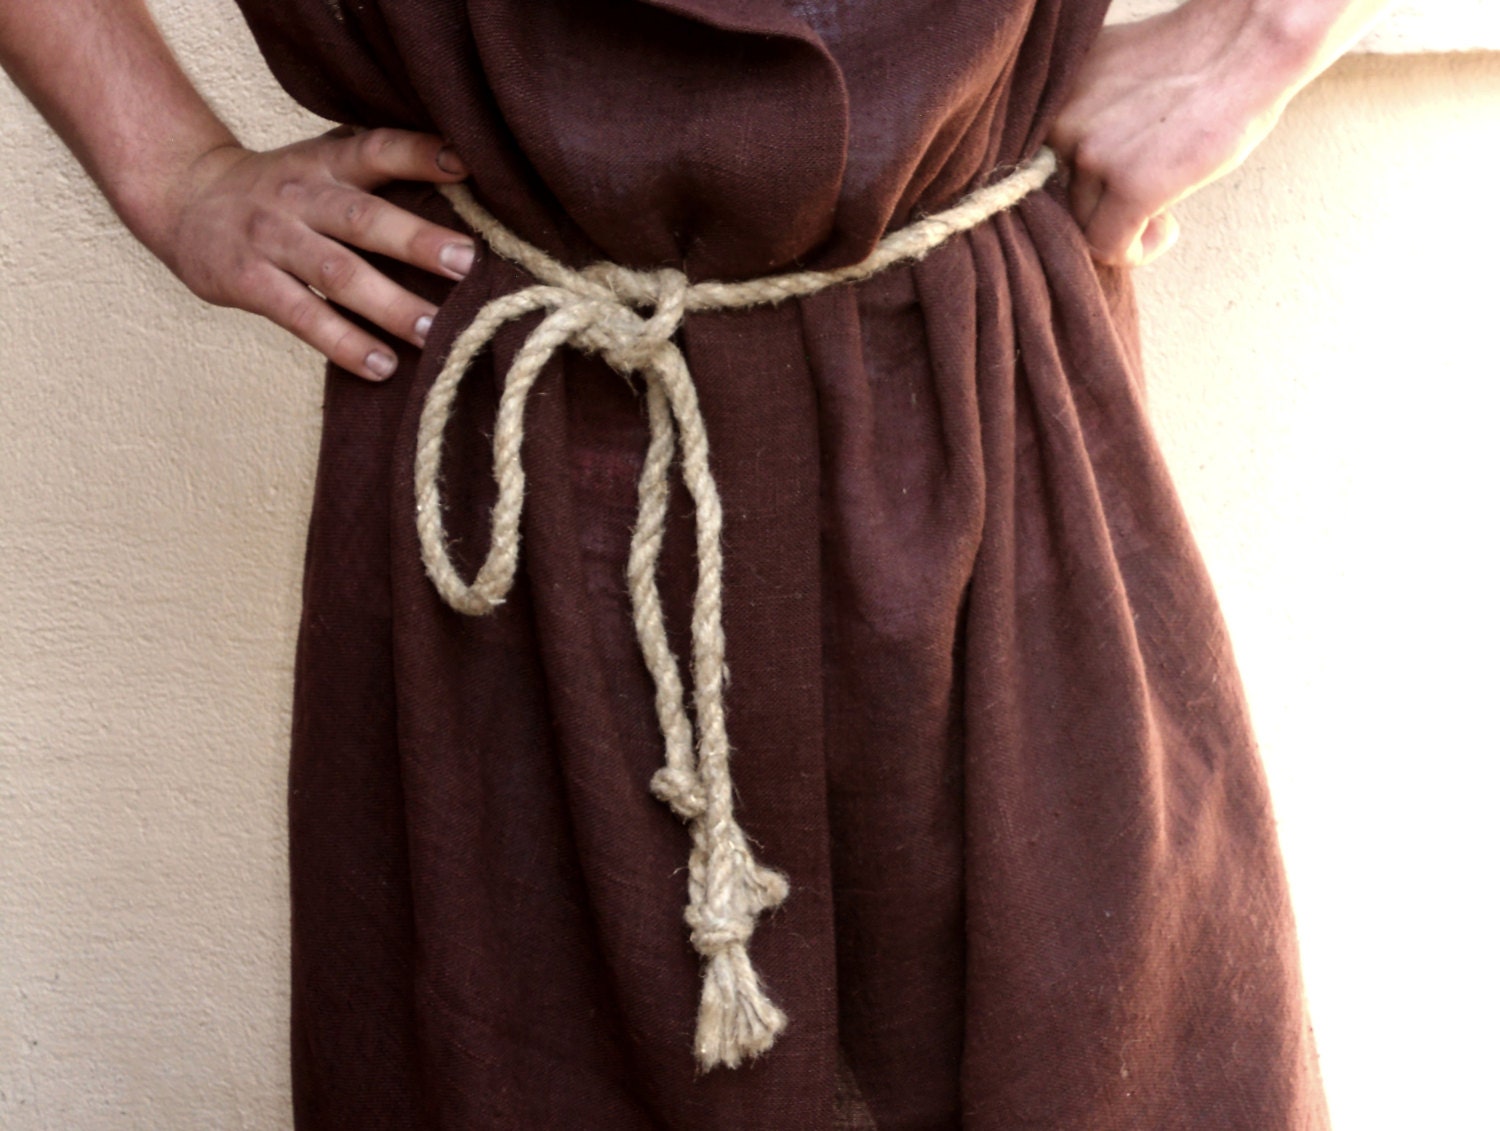 Hemp Rope Belt for Medieval Costume, Primitive Rough Rustic